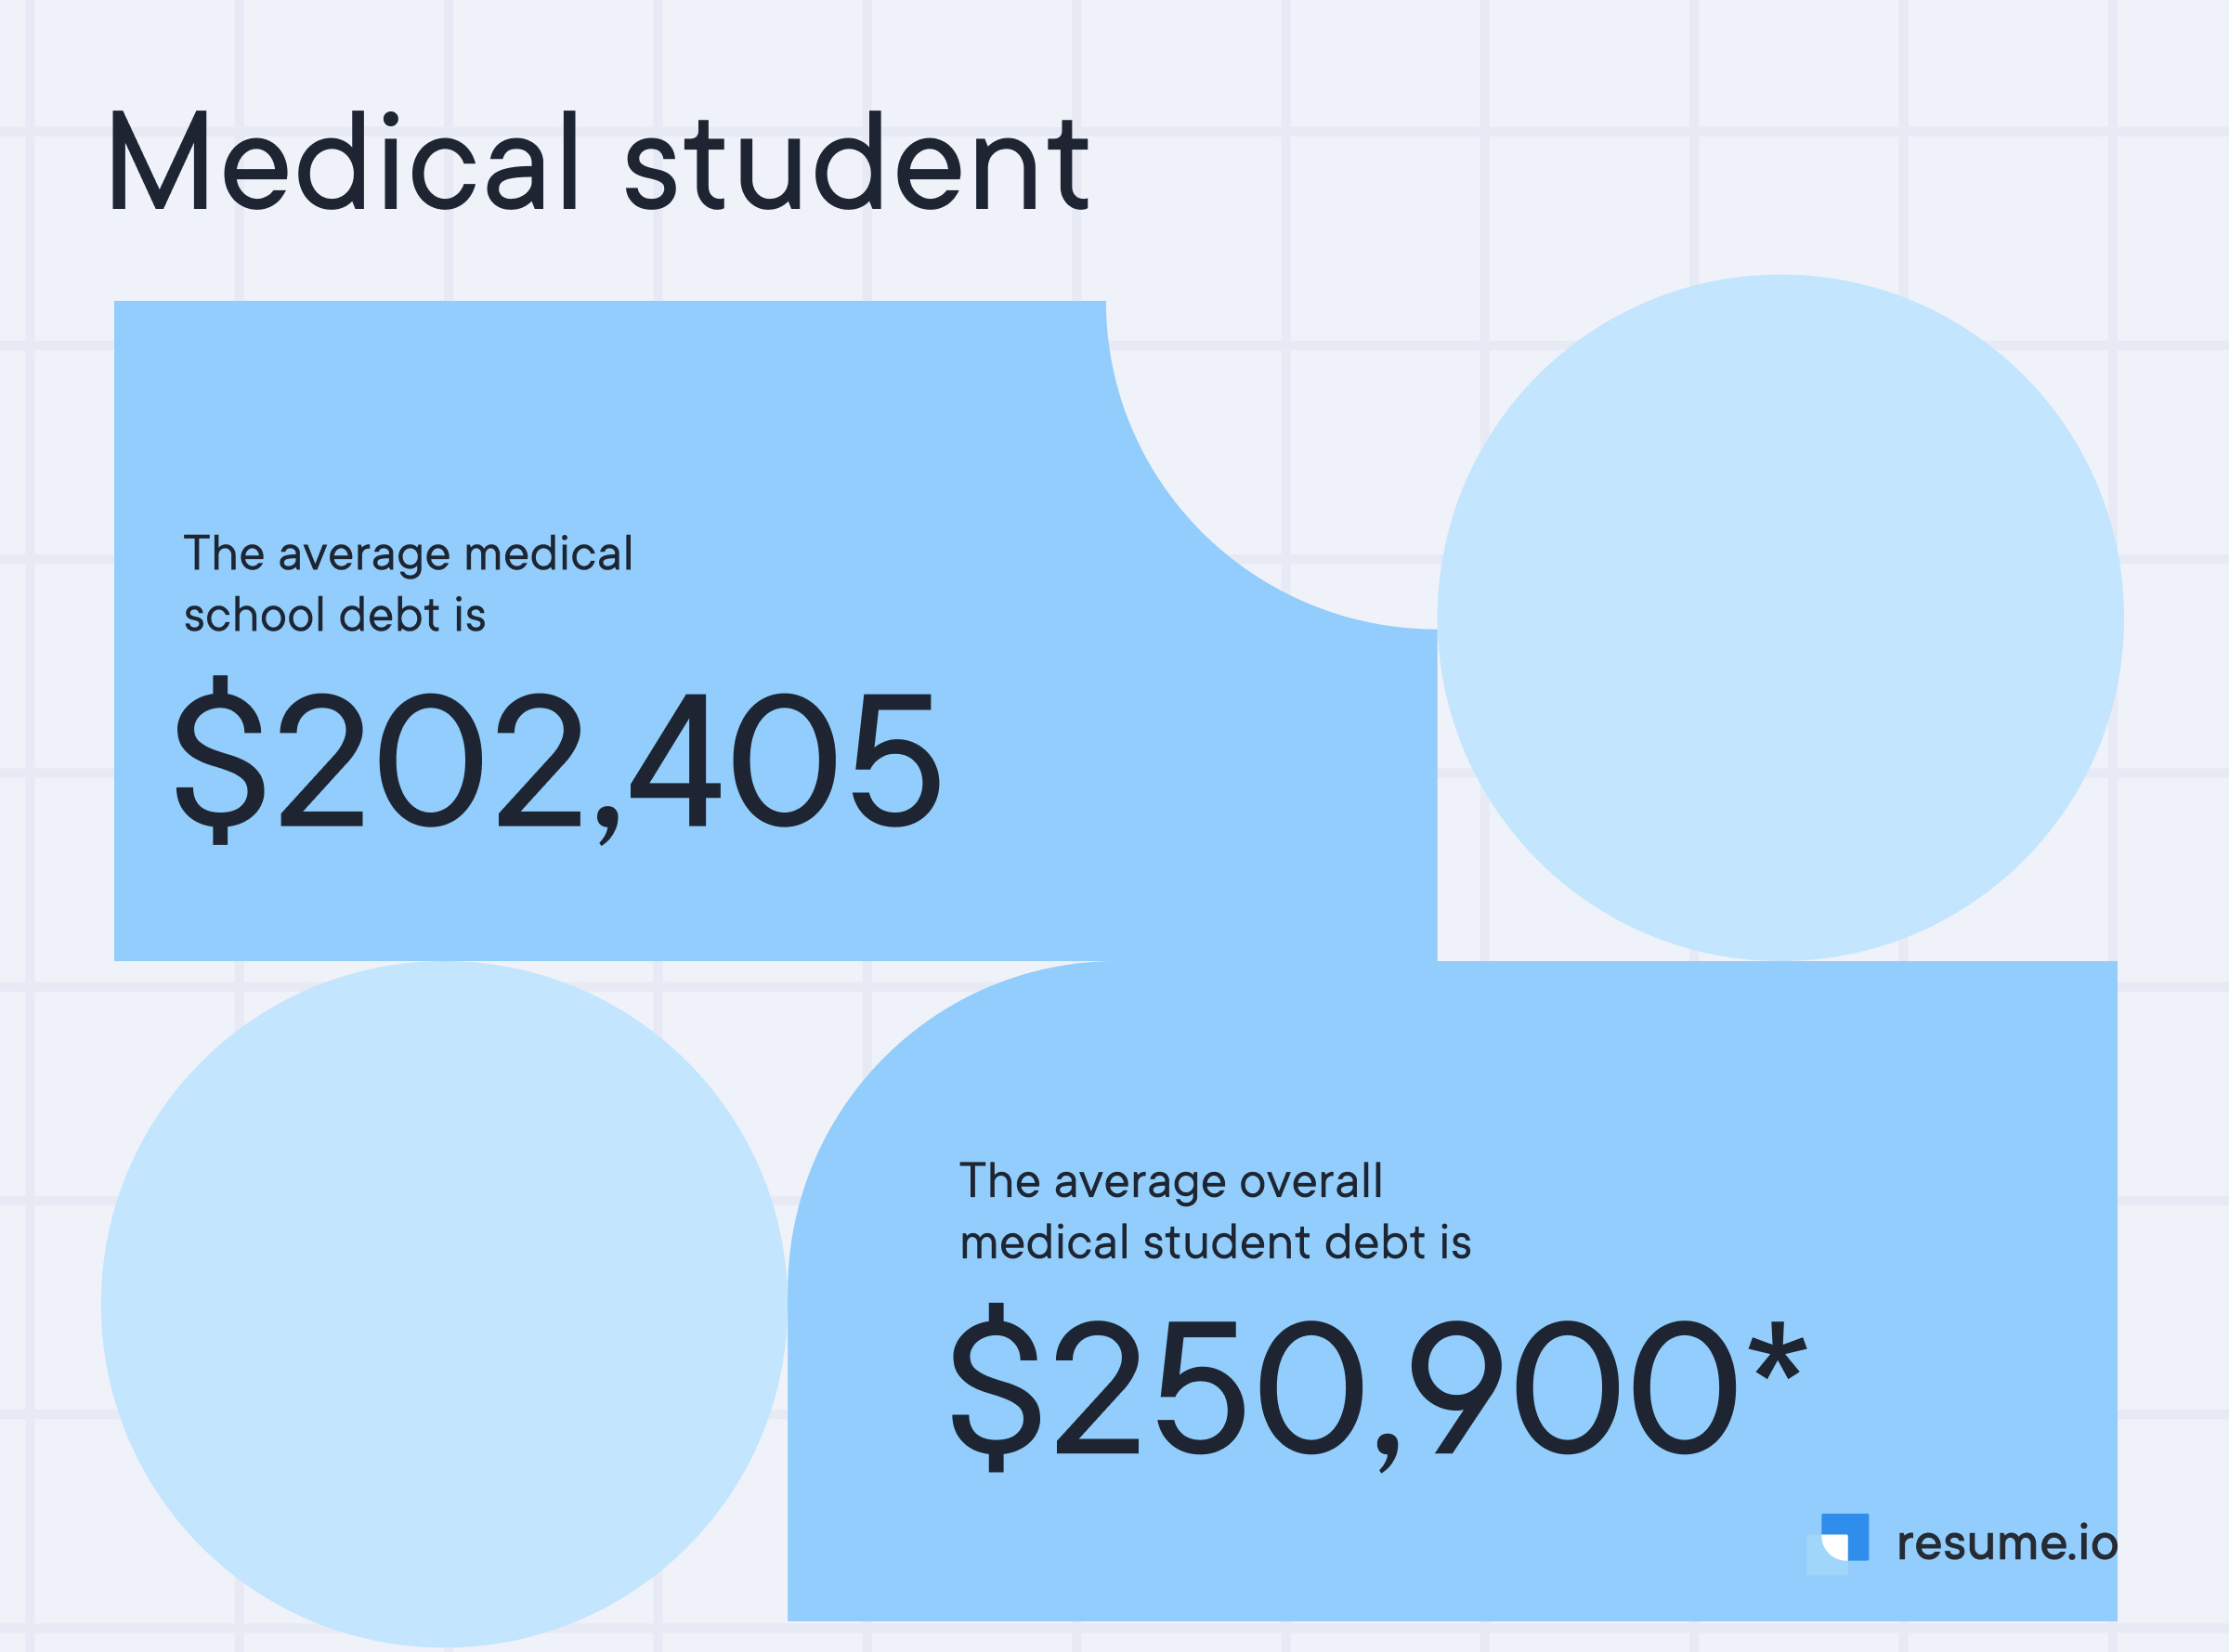 The average medical school debt is 202,405 dollar. 